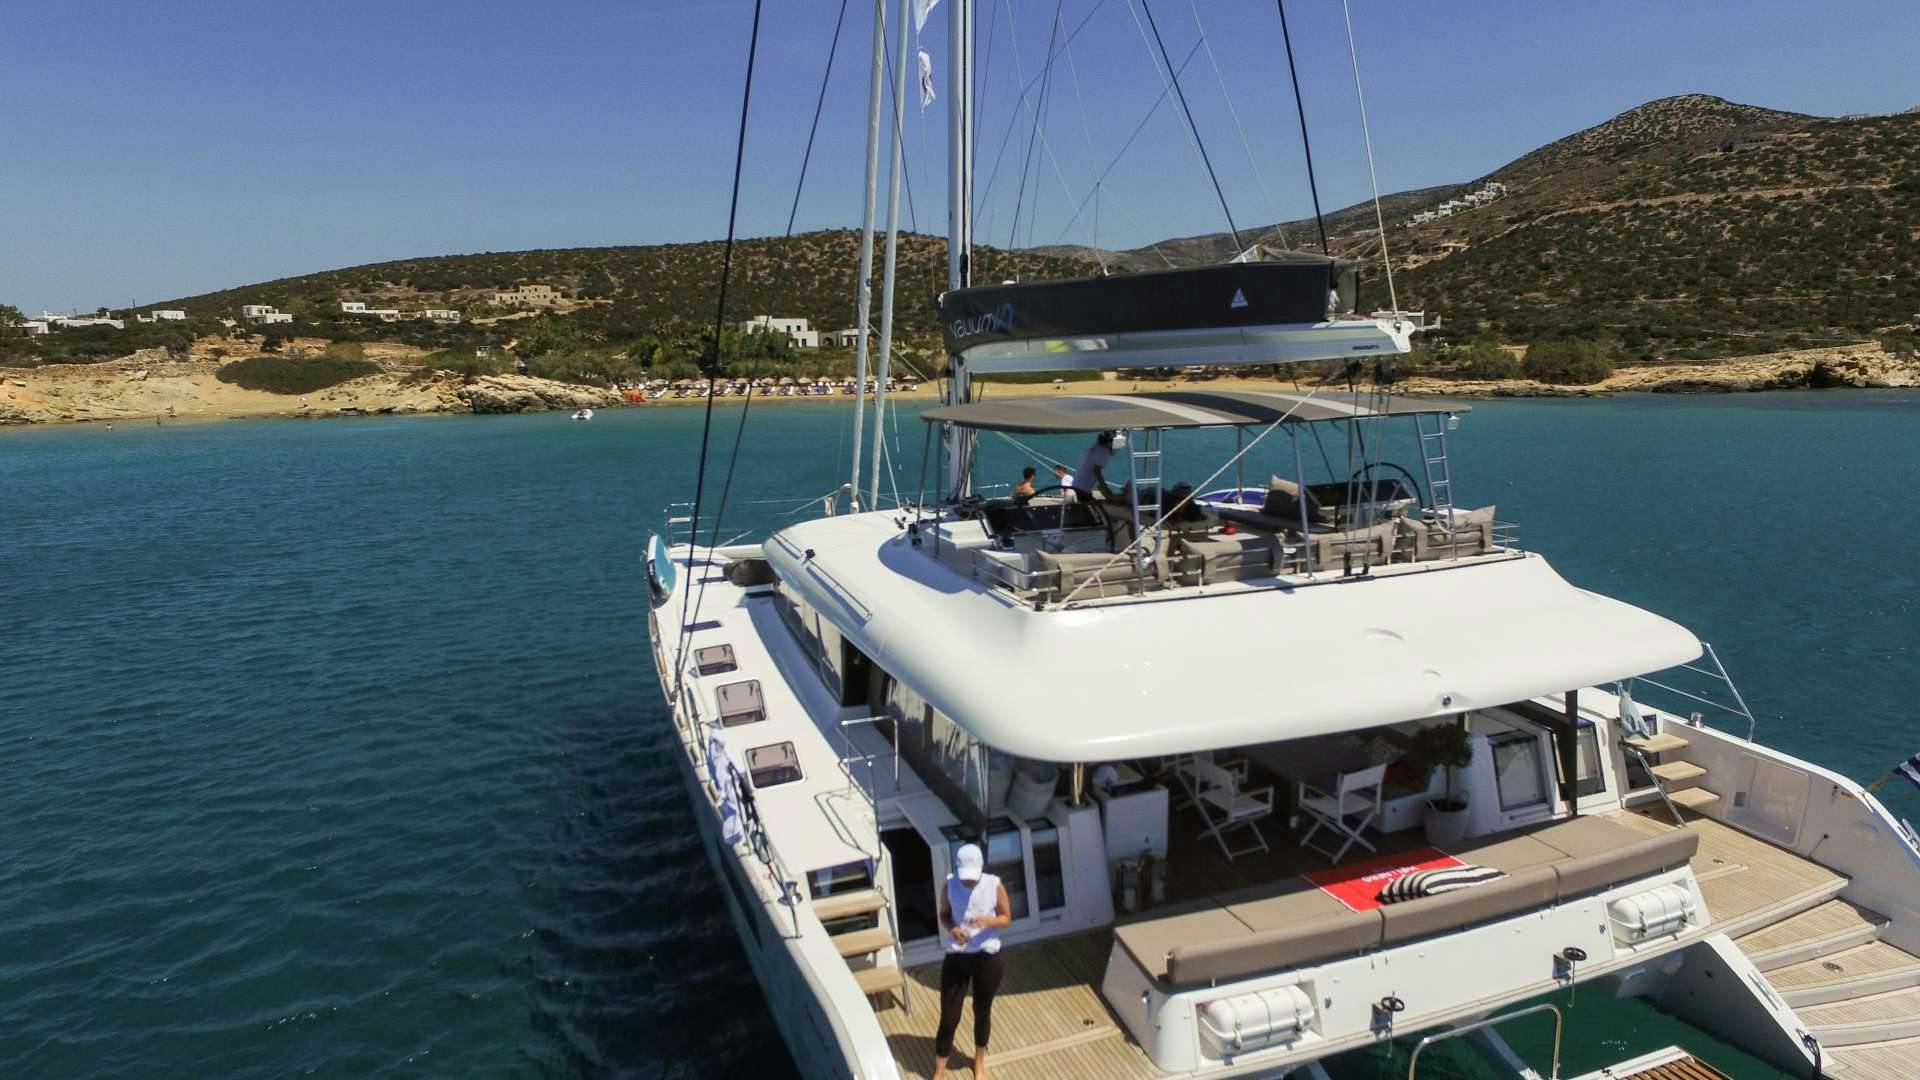 valium62 - Yacht Charter St Katherine's Docks & Boat hire in Greece 1